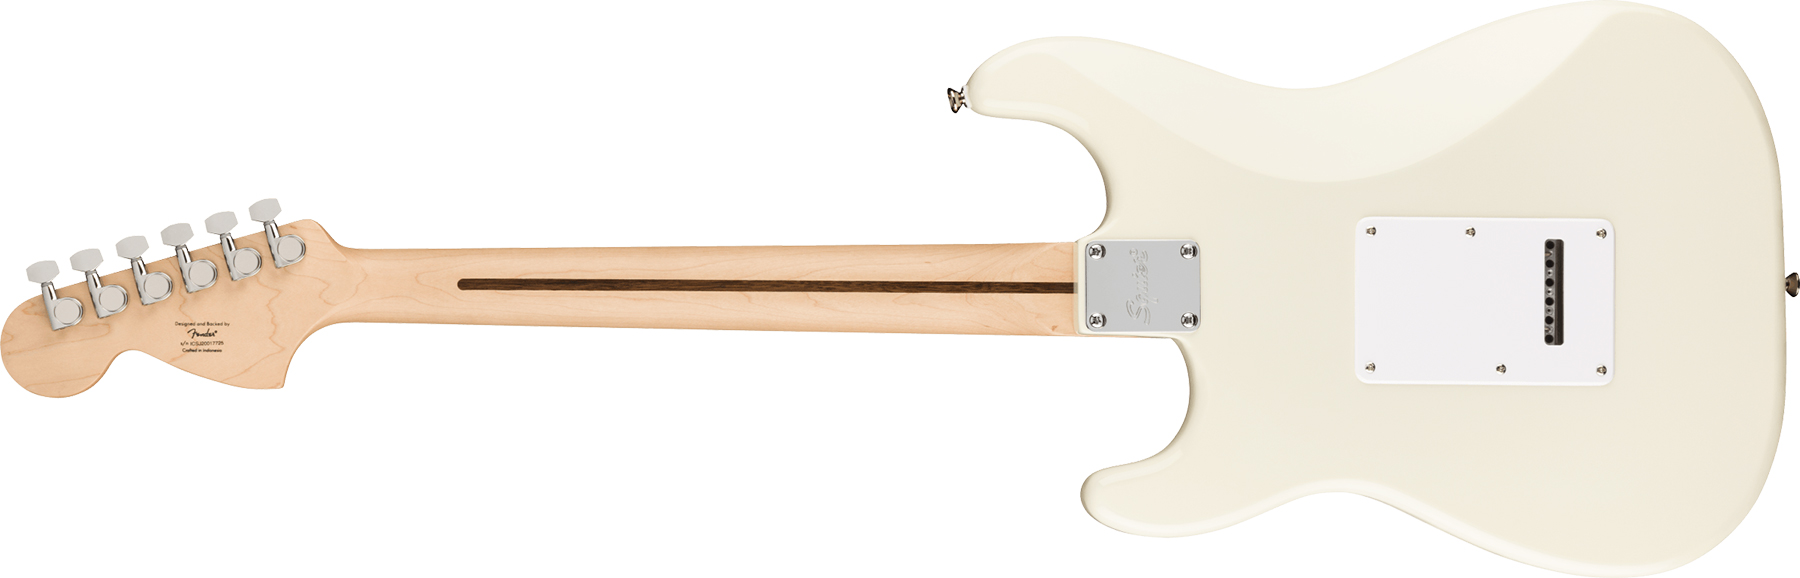 Squier Strat Affinity 2021 Sss Trem Mn - Olympic White - Guitarra eléctrica con forma de str. - Variation 1